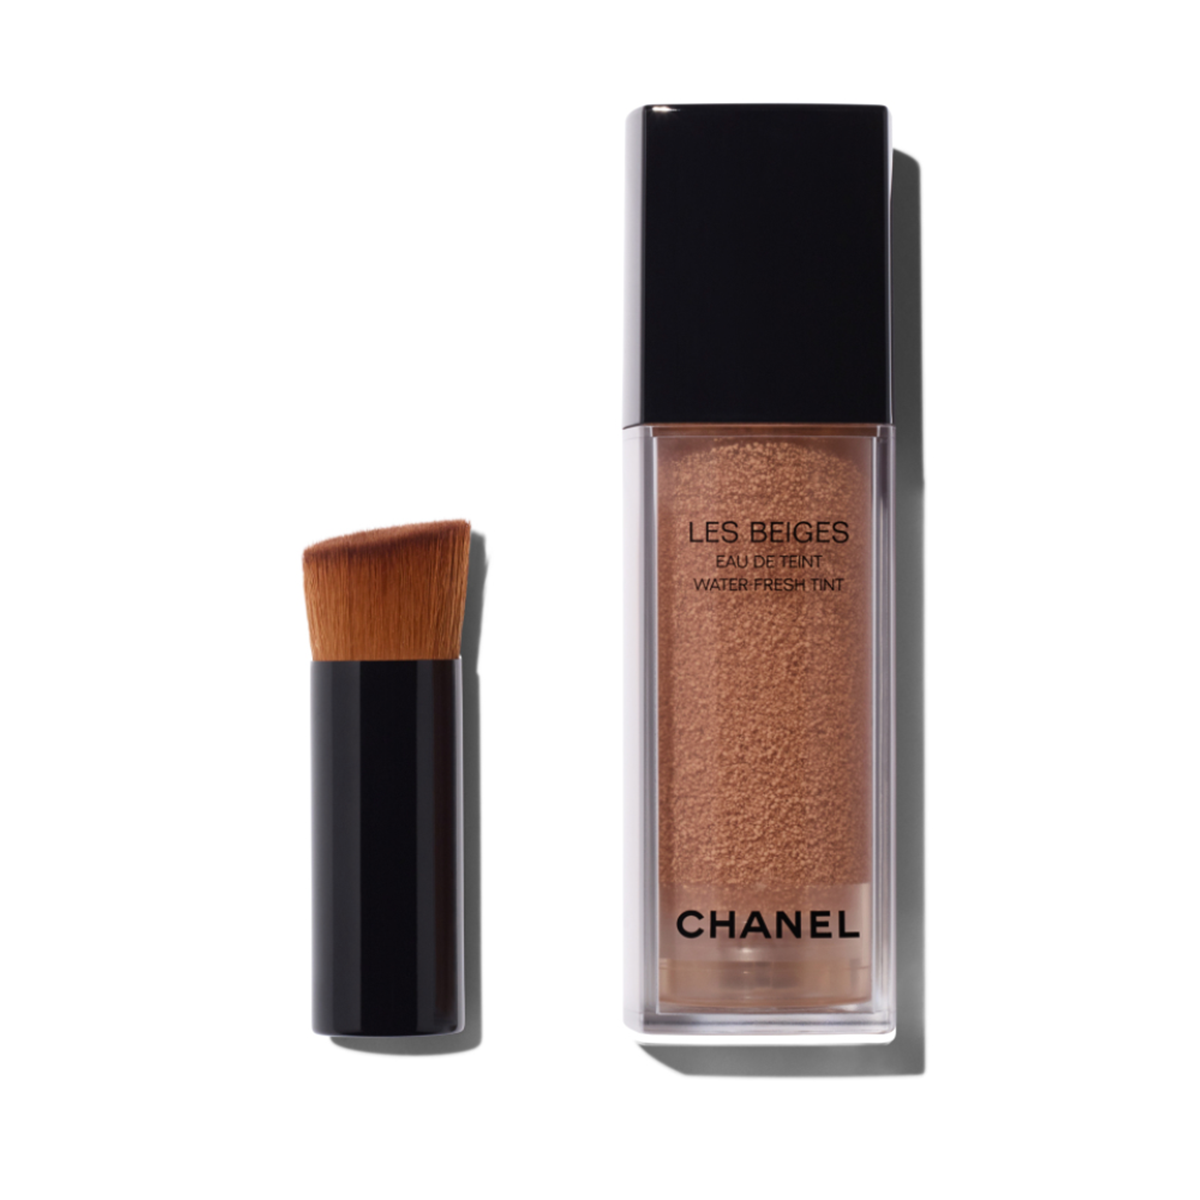 Chanel Les Beiges Eau De Teint Water Fresh Tint   Light Deep 30ml   Cosmetics Now Singapore